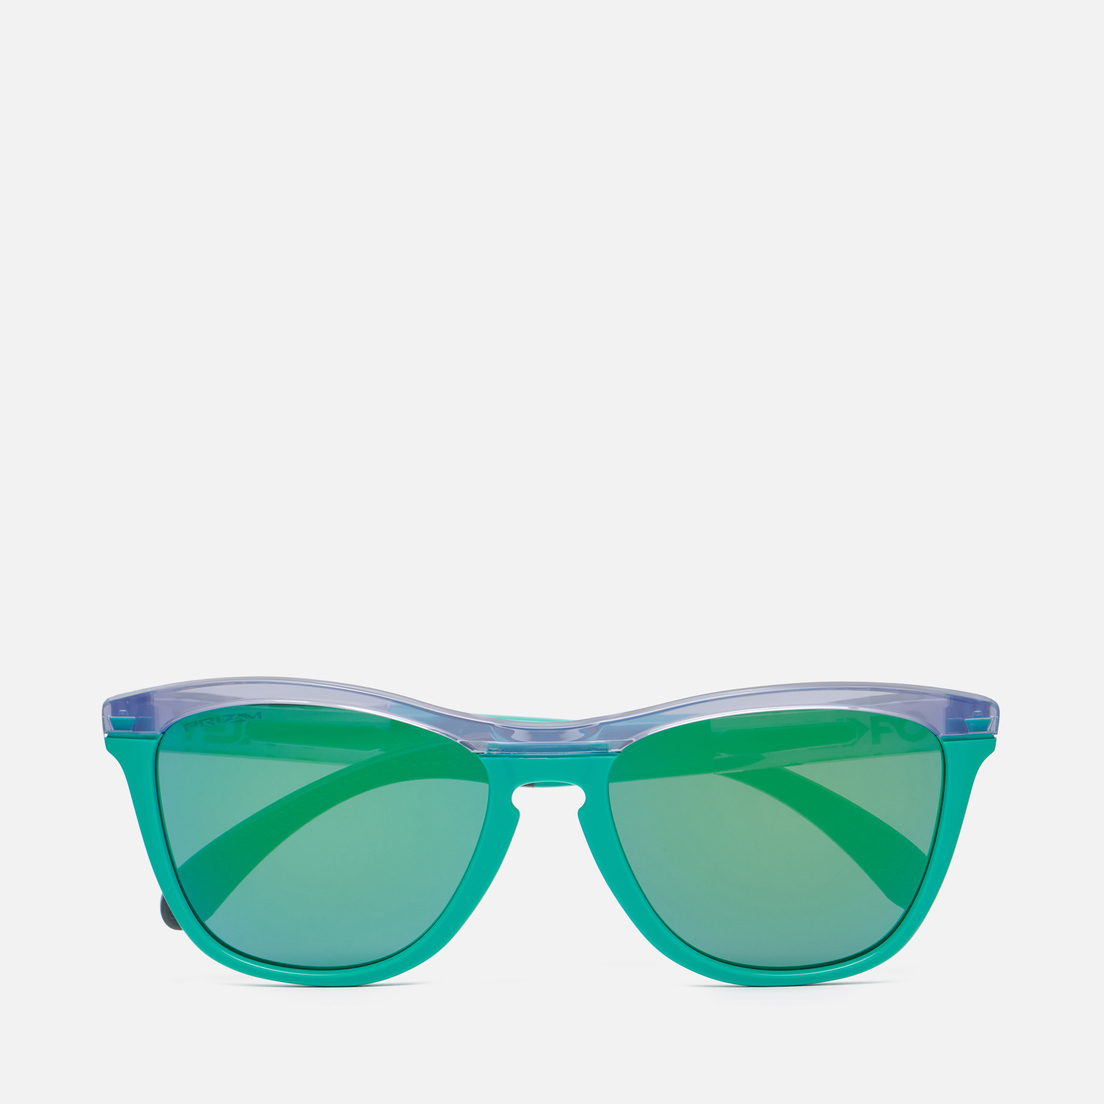 Oakley Солнцезащитные очки Frogskins Range